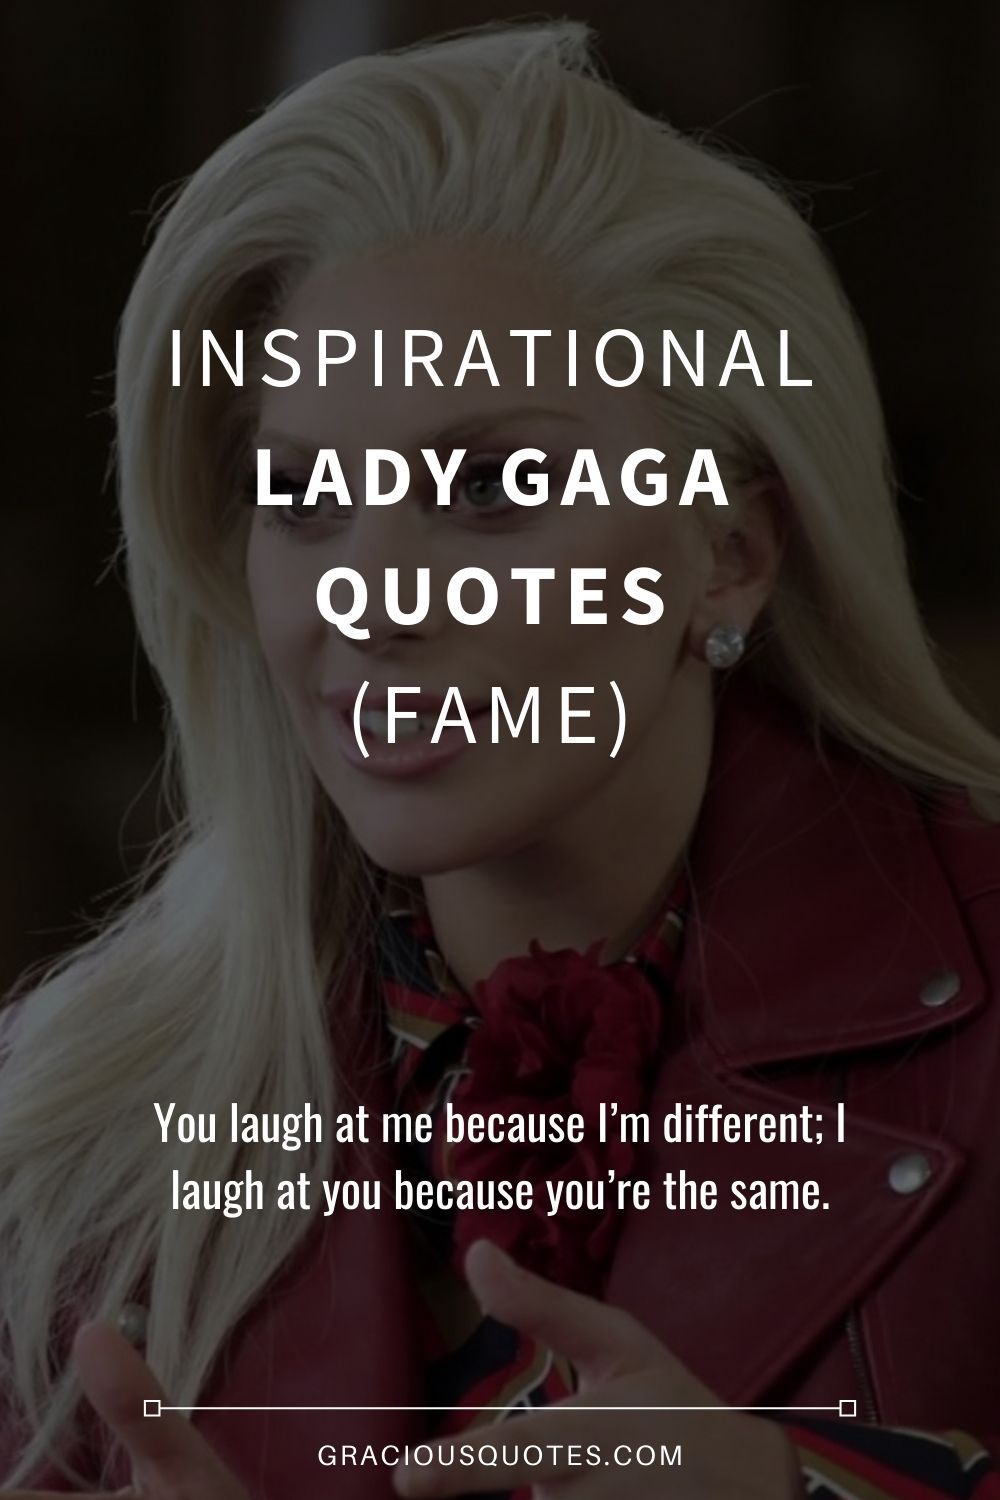 Inspirational Lady Gaga Quotes (FAME) - Gracious Quotes